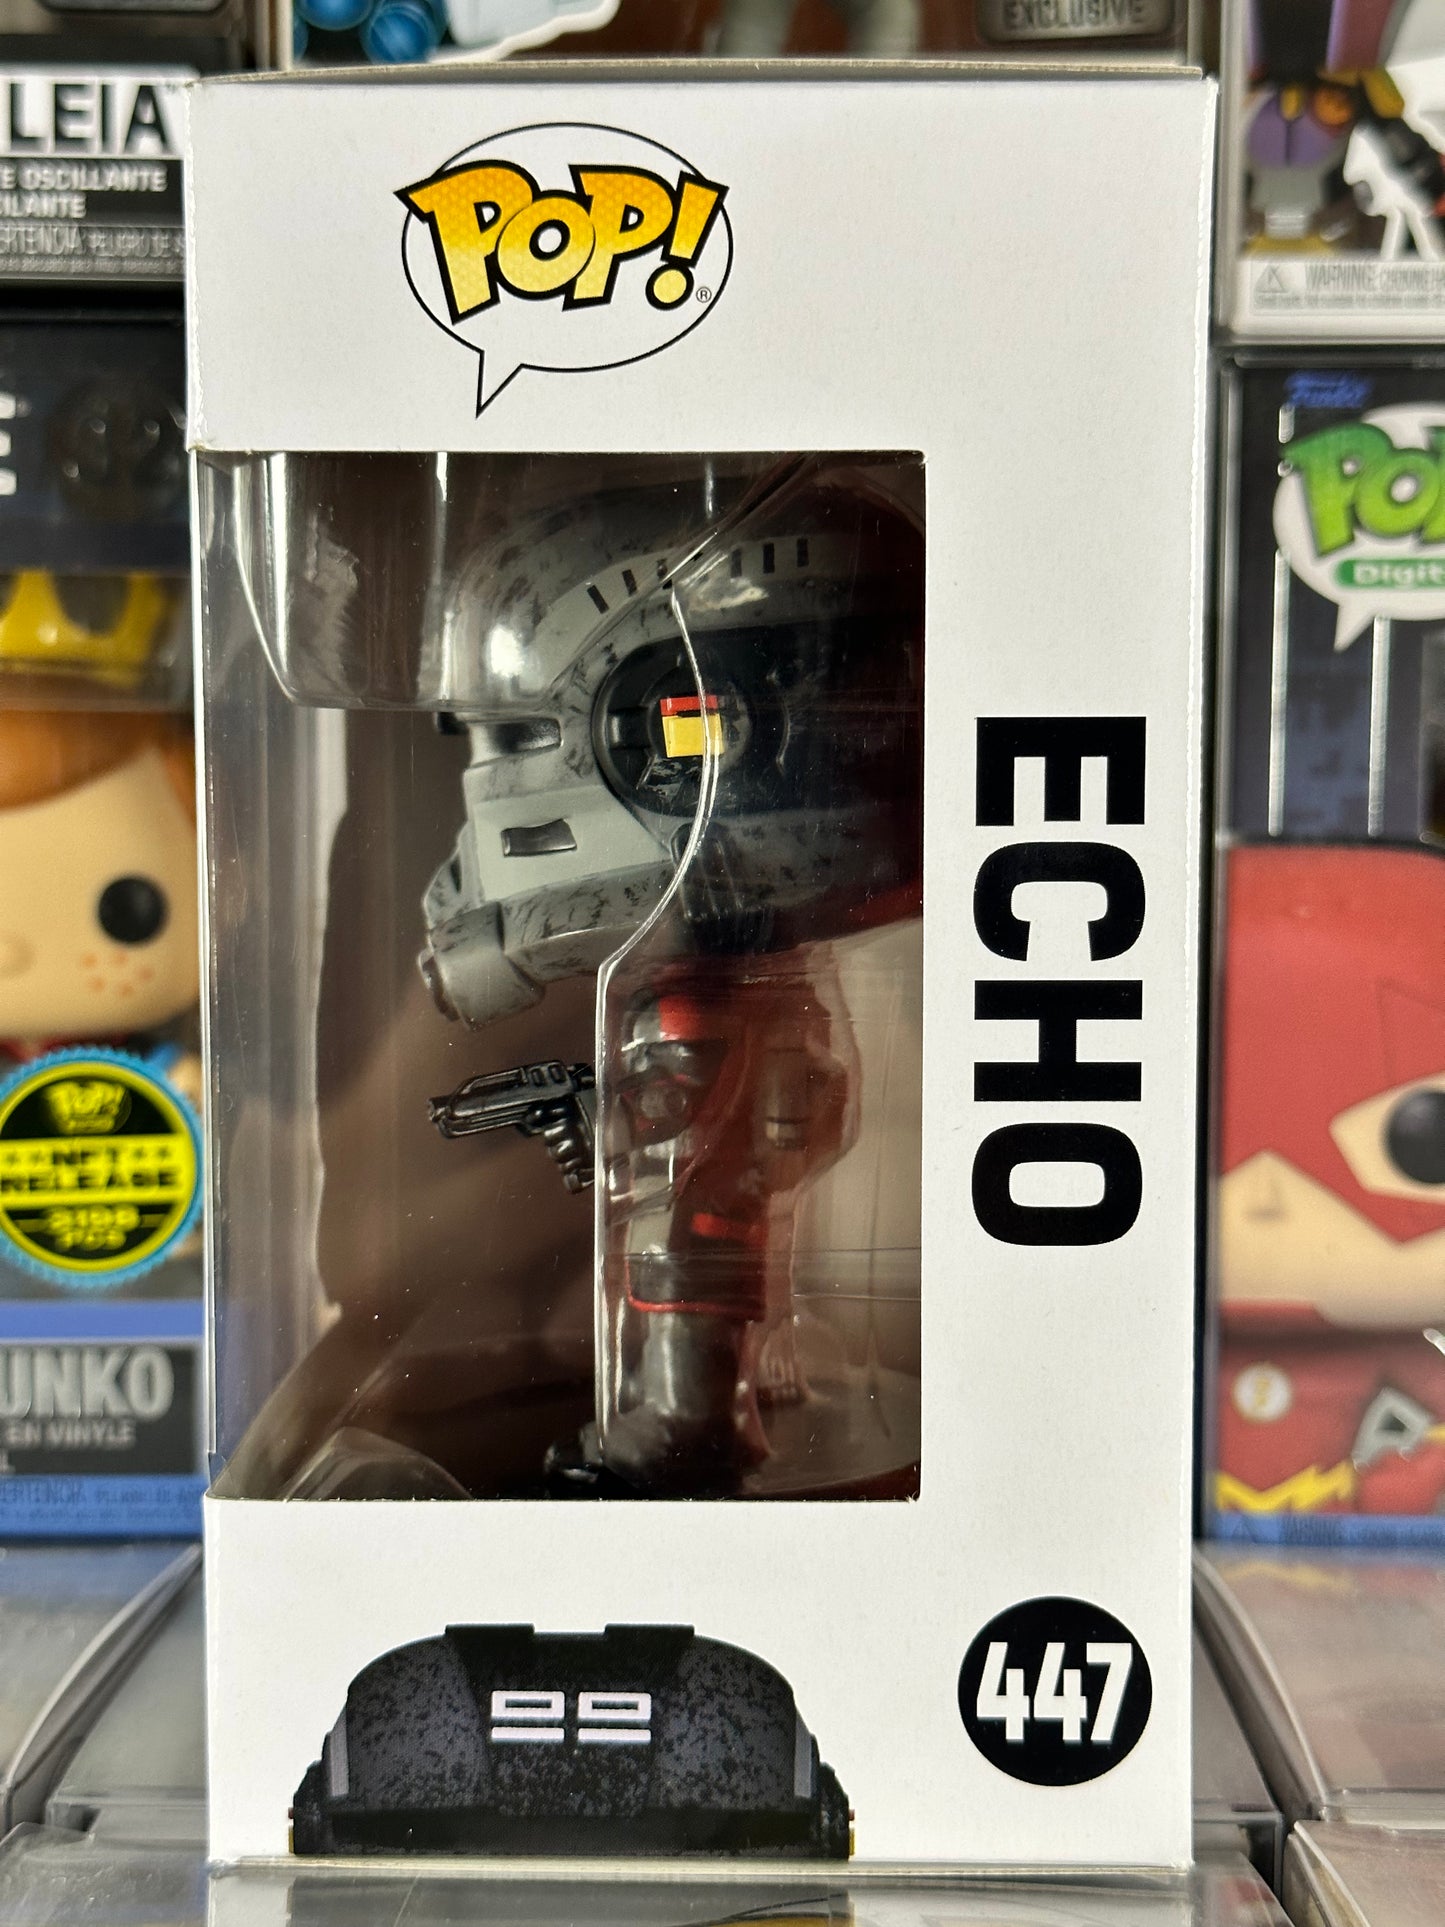 Star Wars - Echo (447)